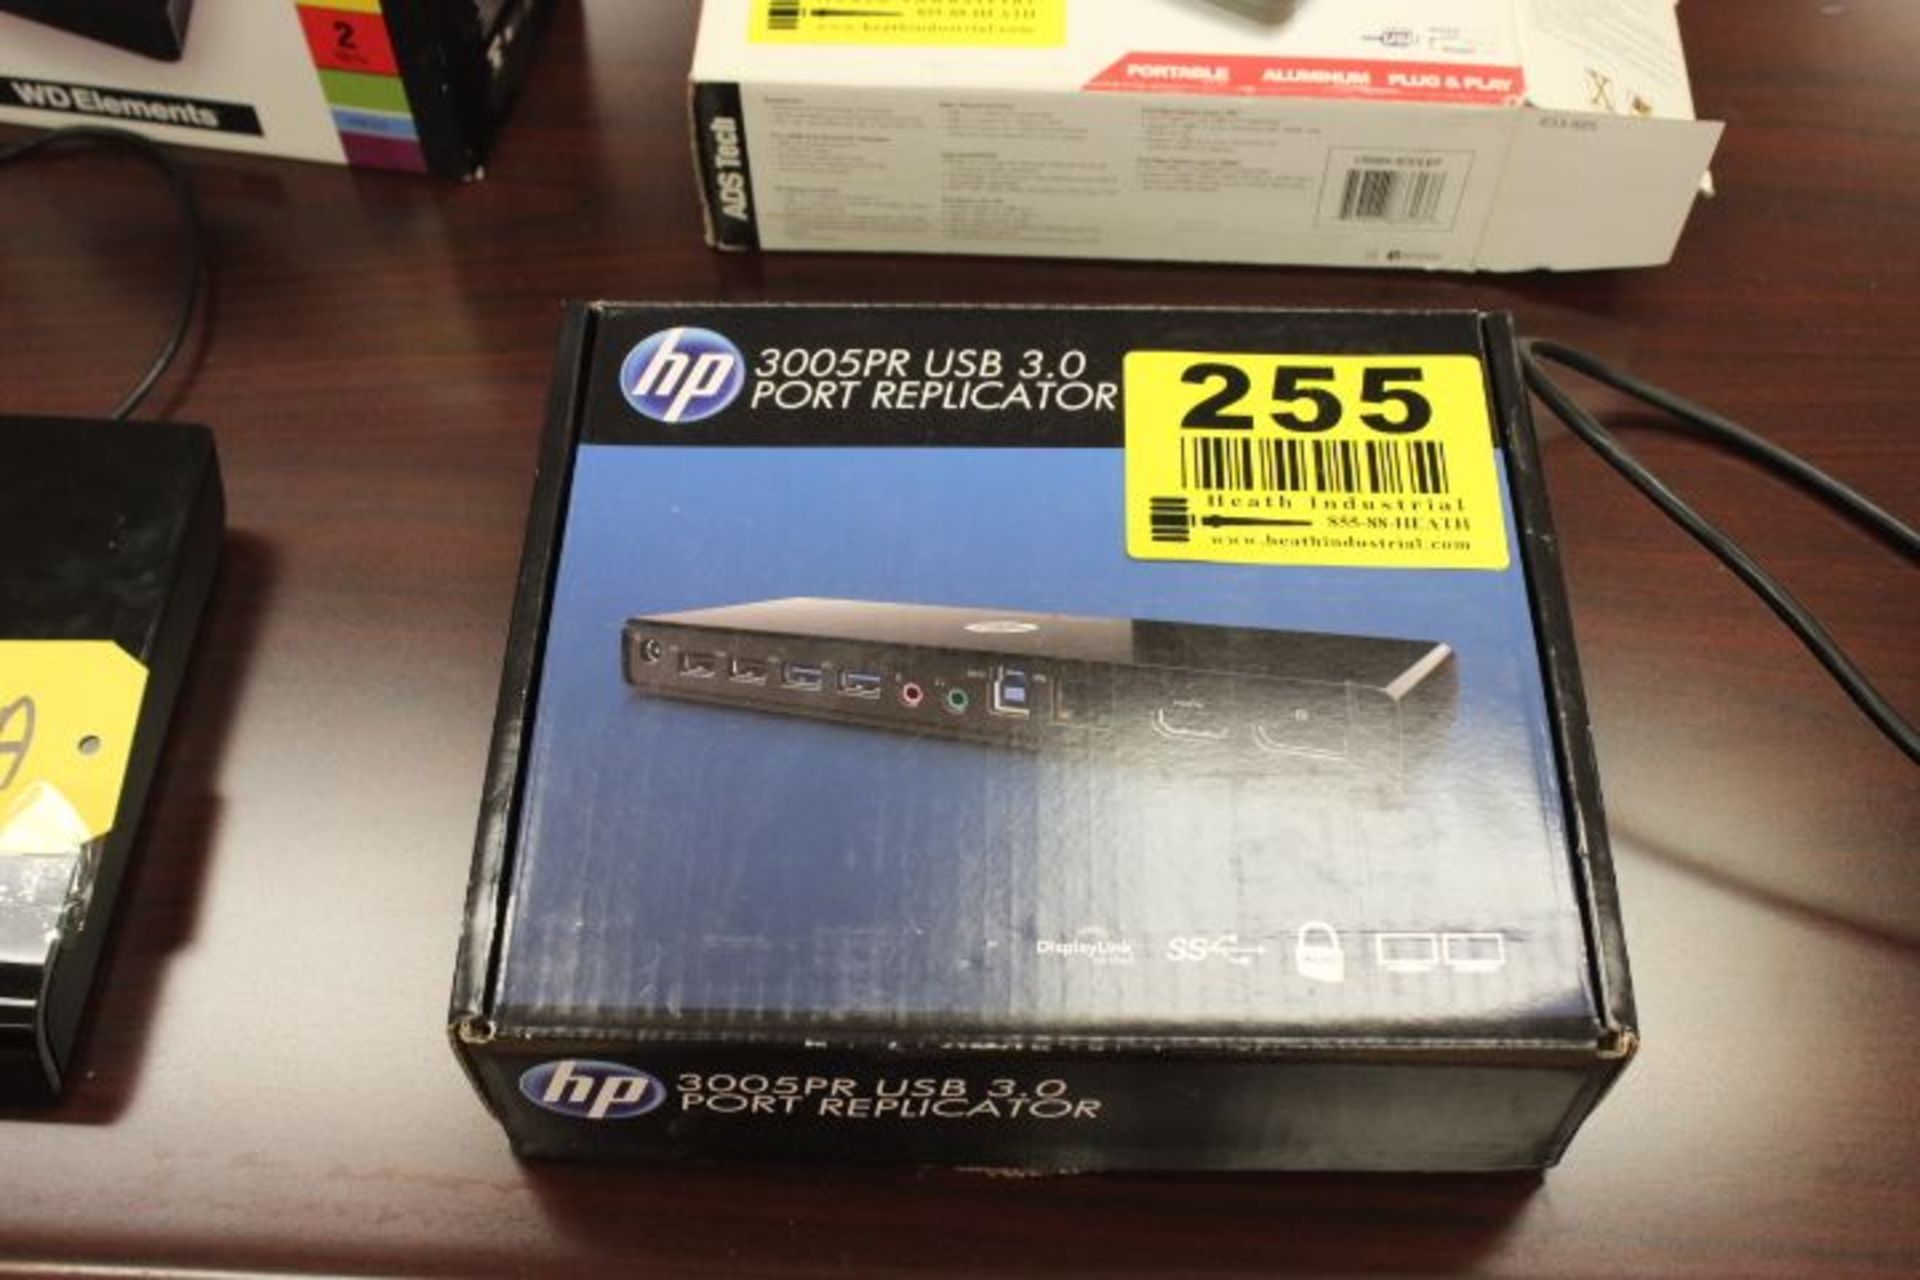 HP MODEL 3005PR USB 3.0 PORT REPLICATOR